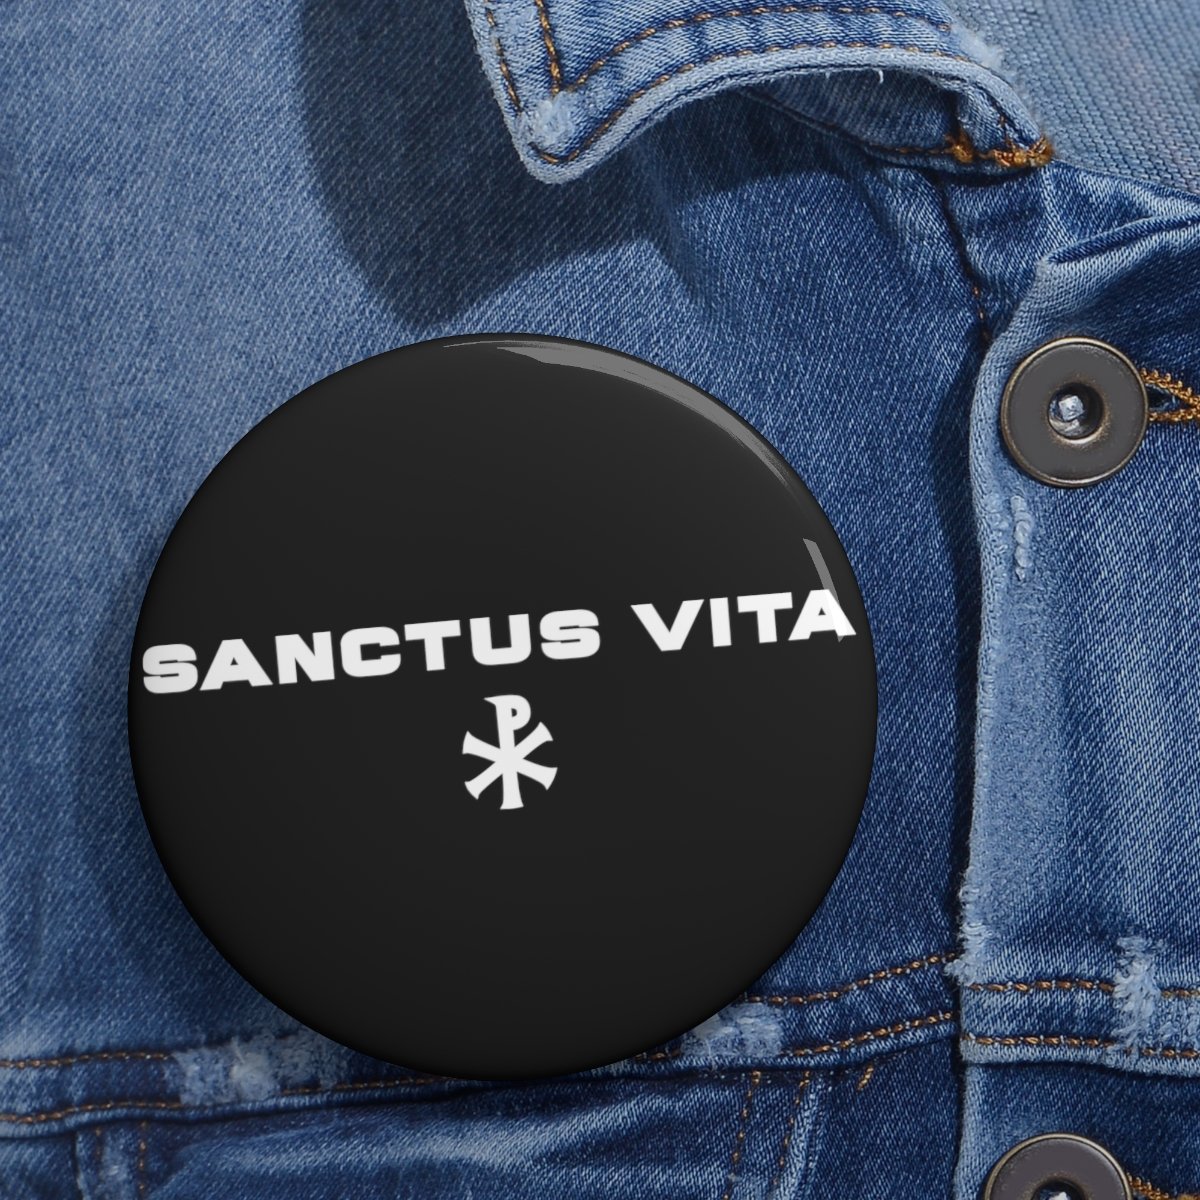 Sanctus Vita Logo Pin Buttons